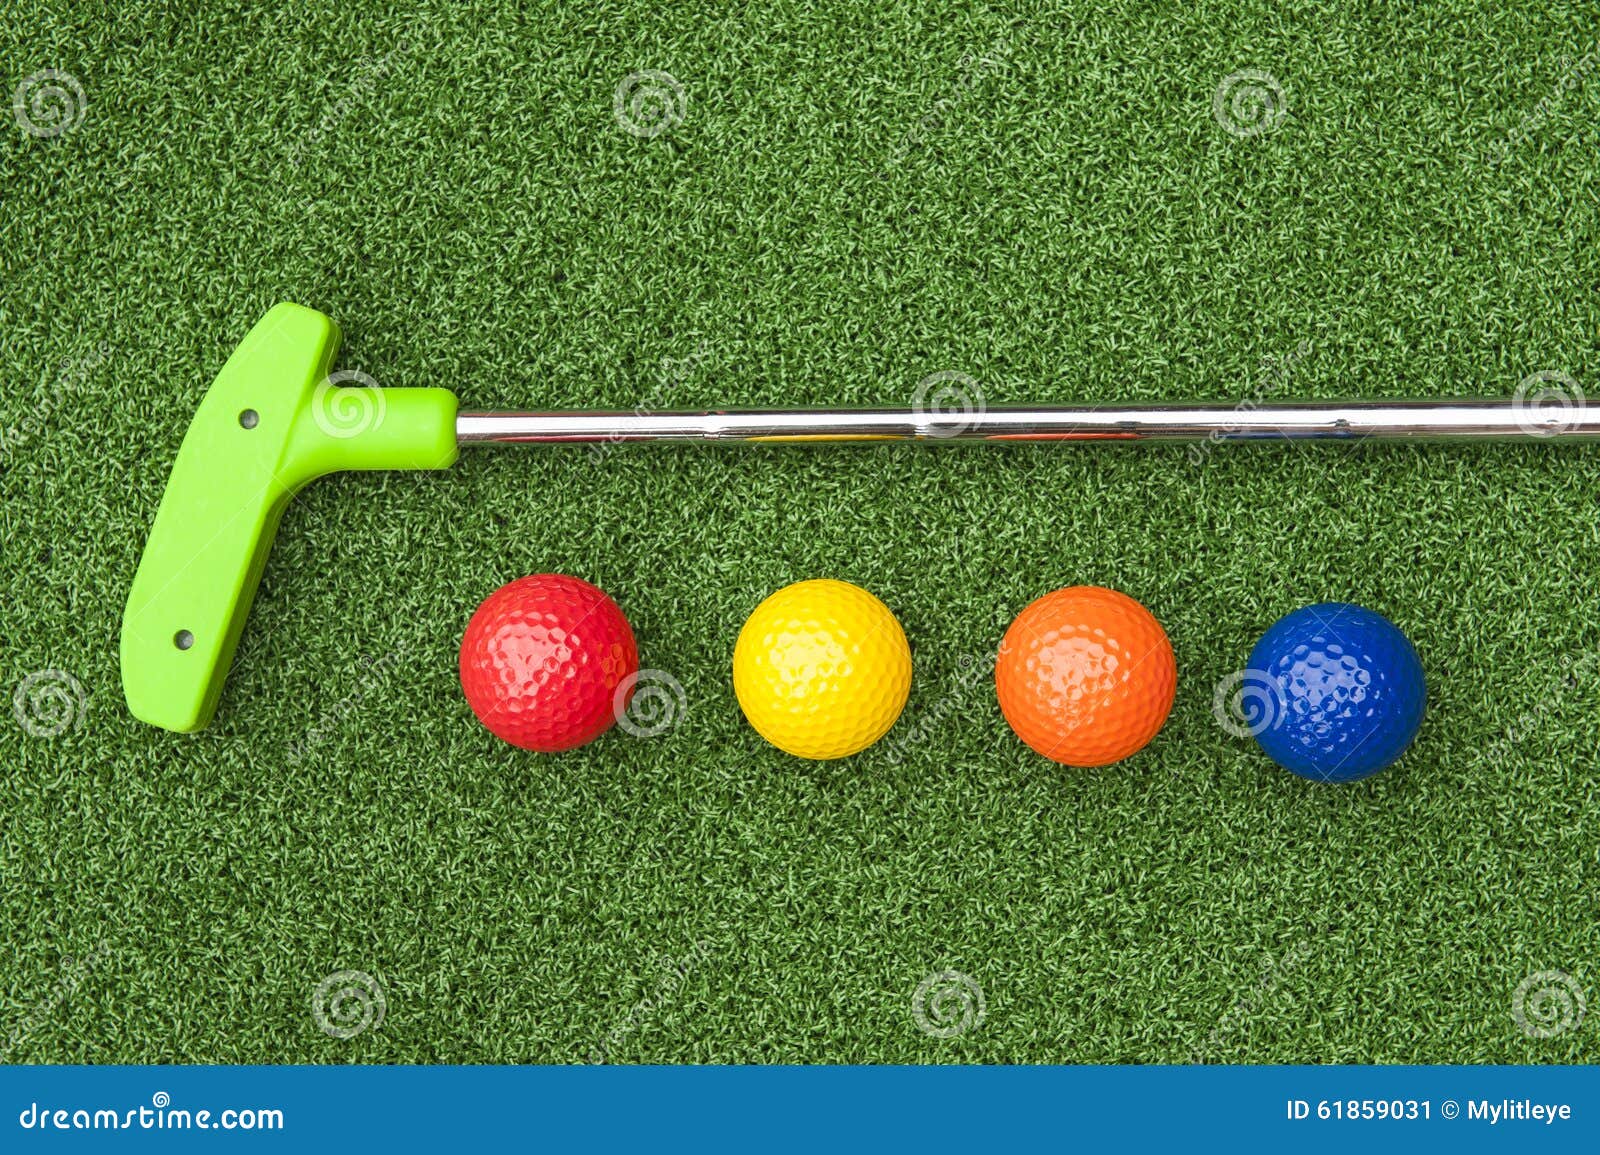 green putt putt club with balls